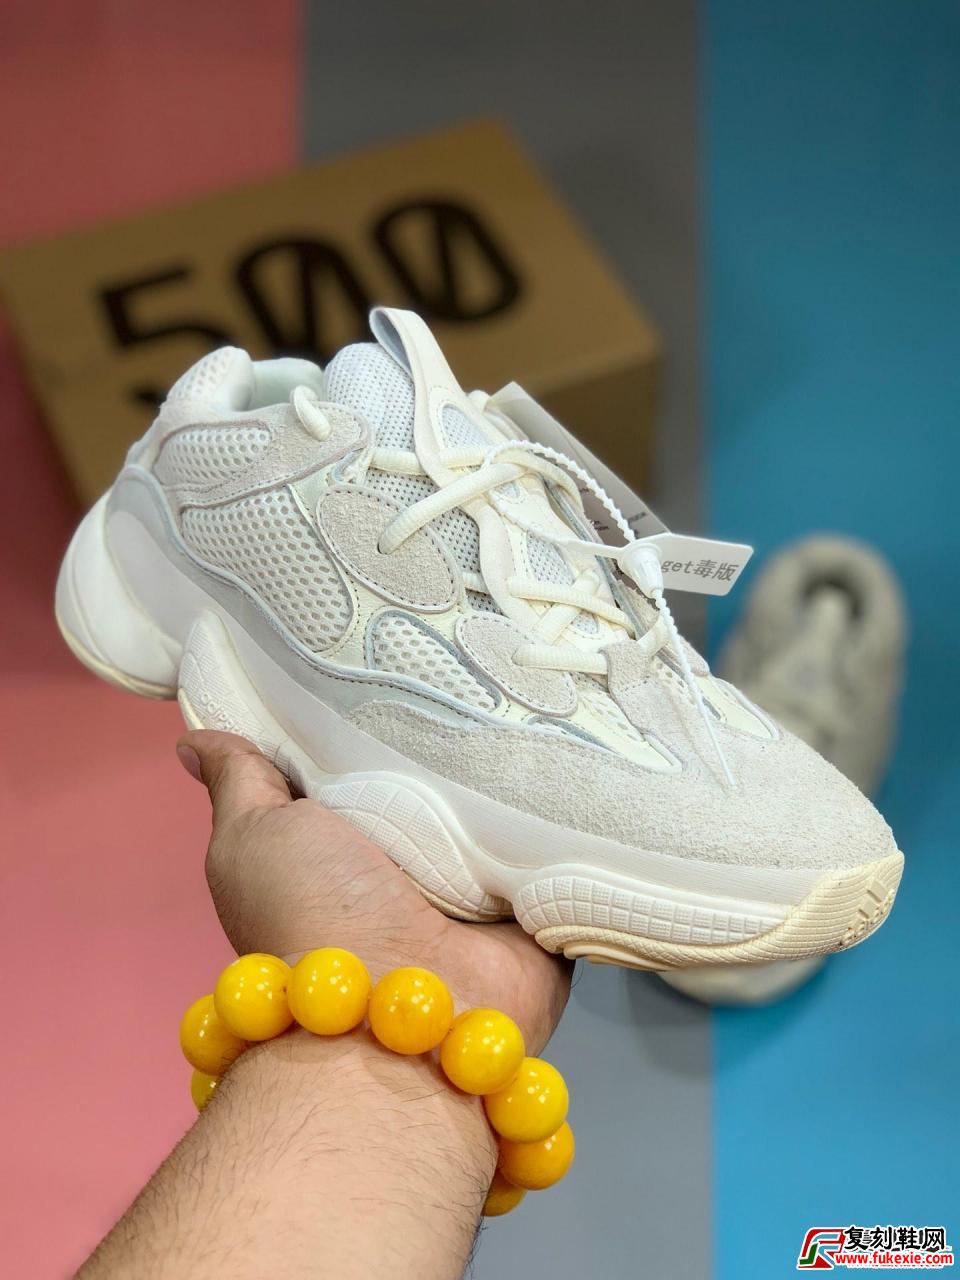 Adidas Yeezy 500 “Bone White” 椰子500系列/侃爷新作 骨白货号 :FV3573| 复刻鞋网 fukexie.com